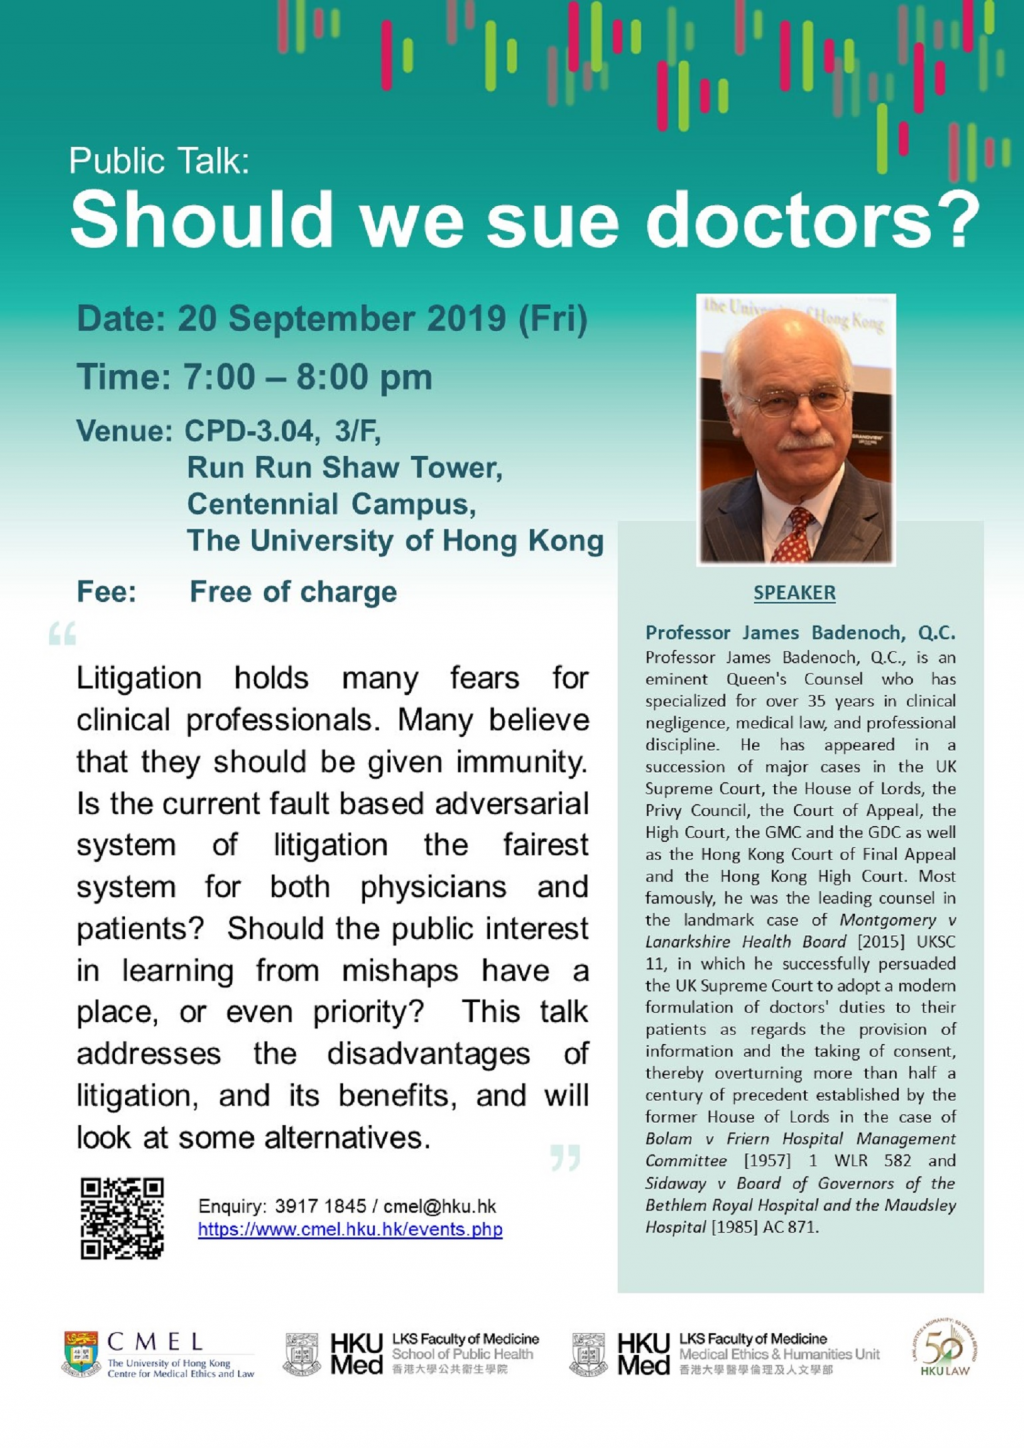 Public Talk: Should we sue doctors? Date: 20 Sep(Fri). Time: 7pm. Venue: CPD-3.04, Run Run Shaw Tower, CPD. Speaker: Prof James Badenoch QC